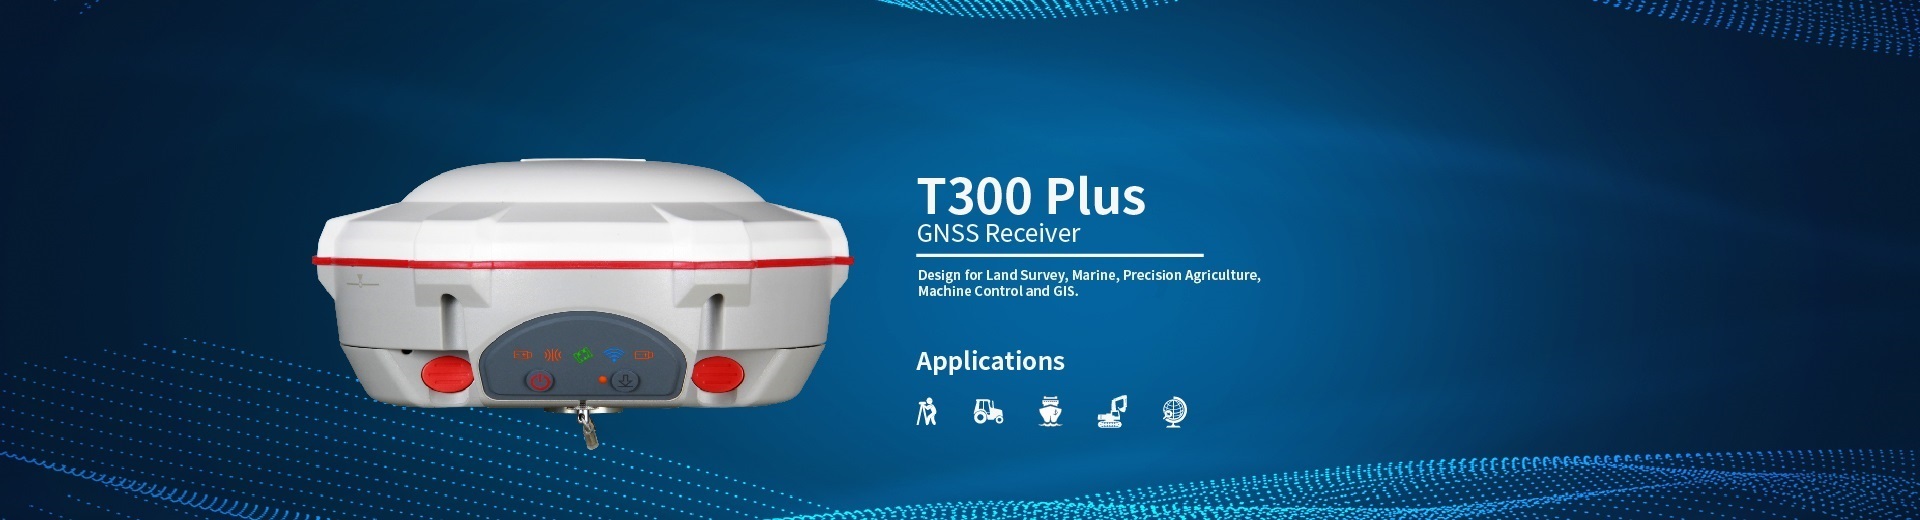 T300 Plus GNSS Receiver